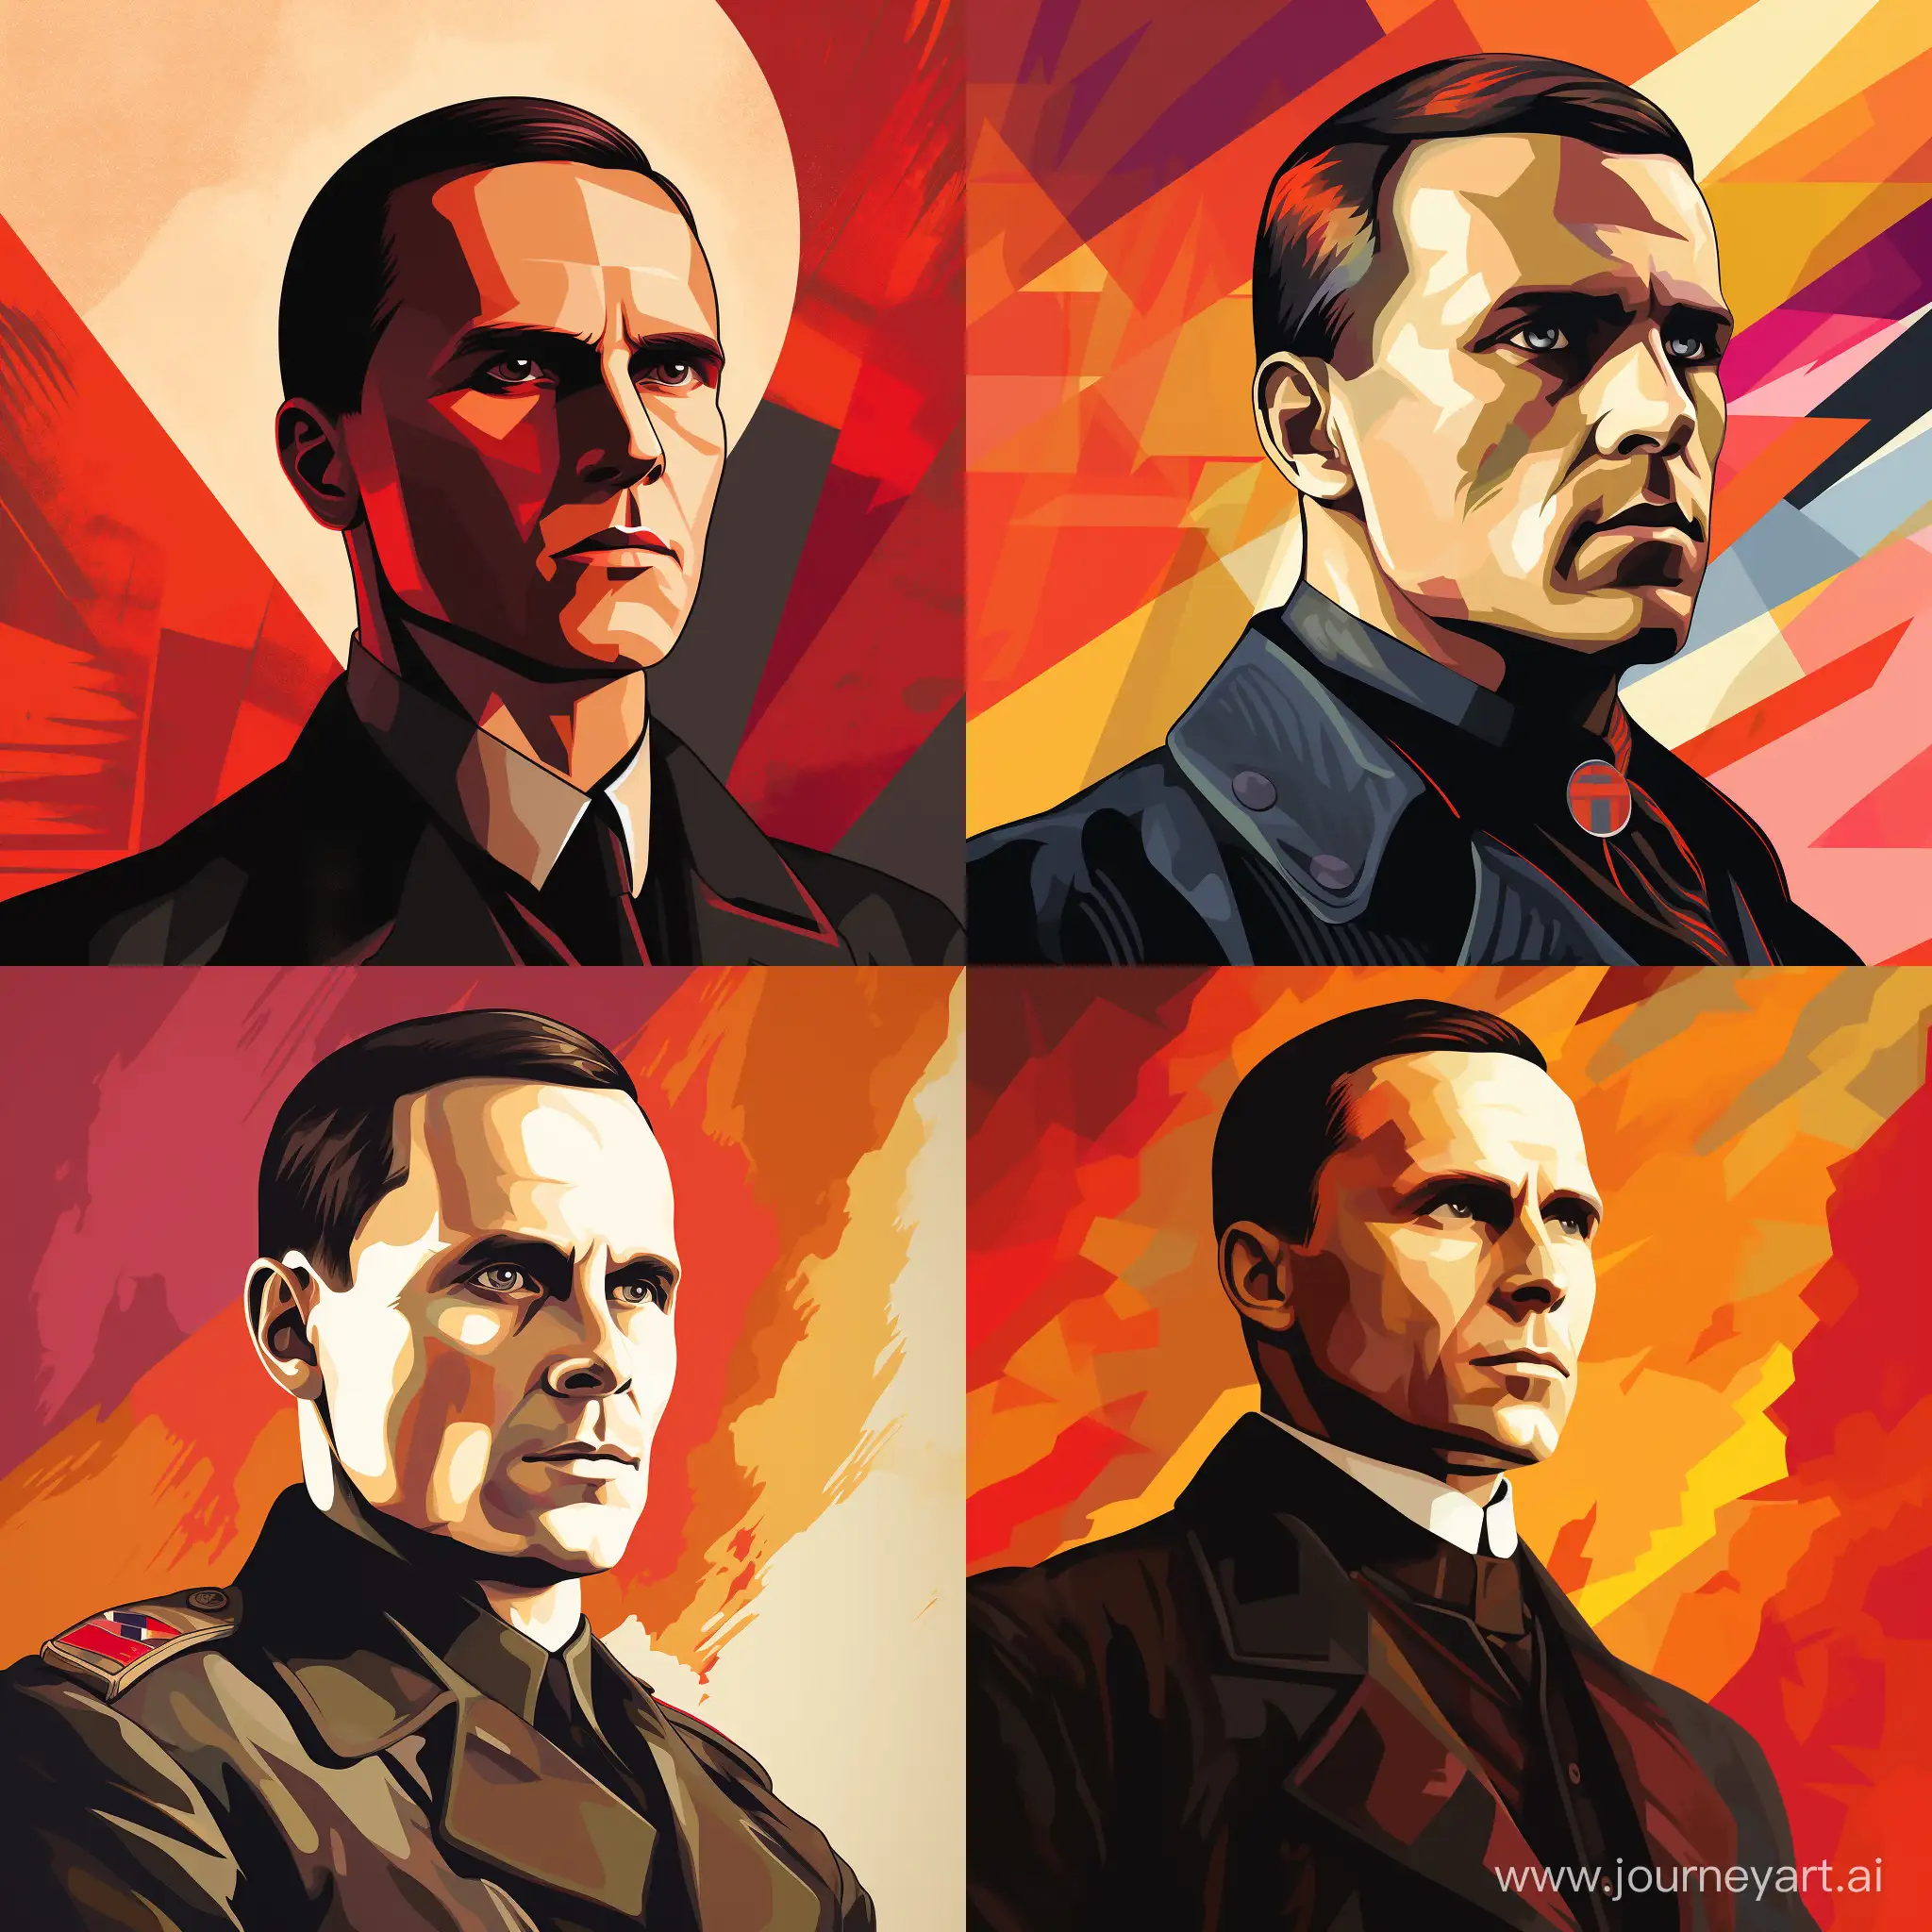 A GTA-style drawing of Stepan Bandera, a prominent leader of Ukrainian nationalism.